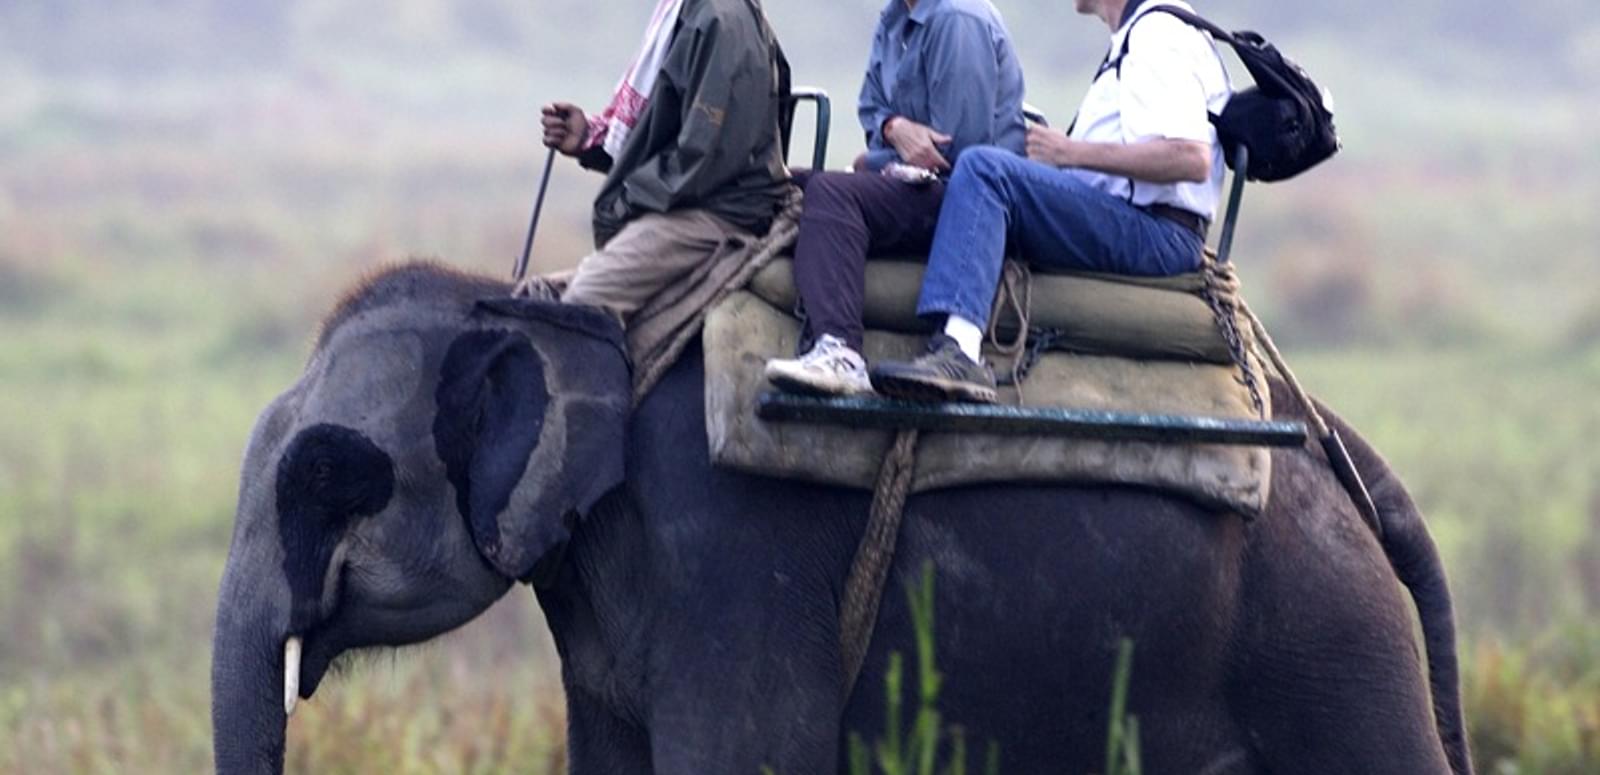 pobitora wildlife sanctuary elephant safari